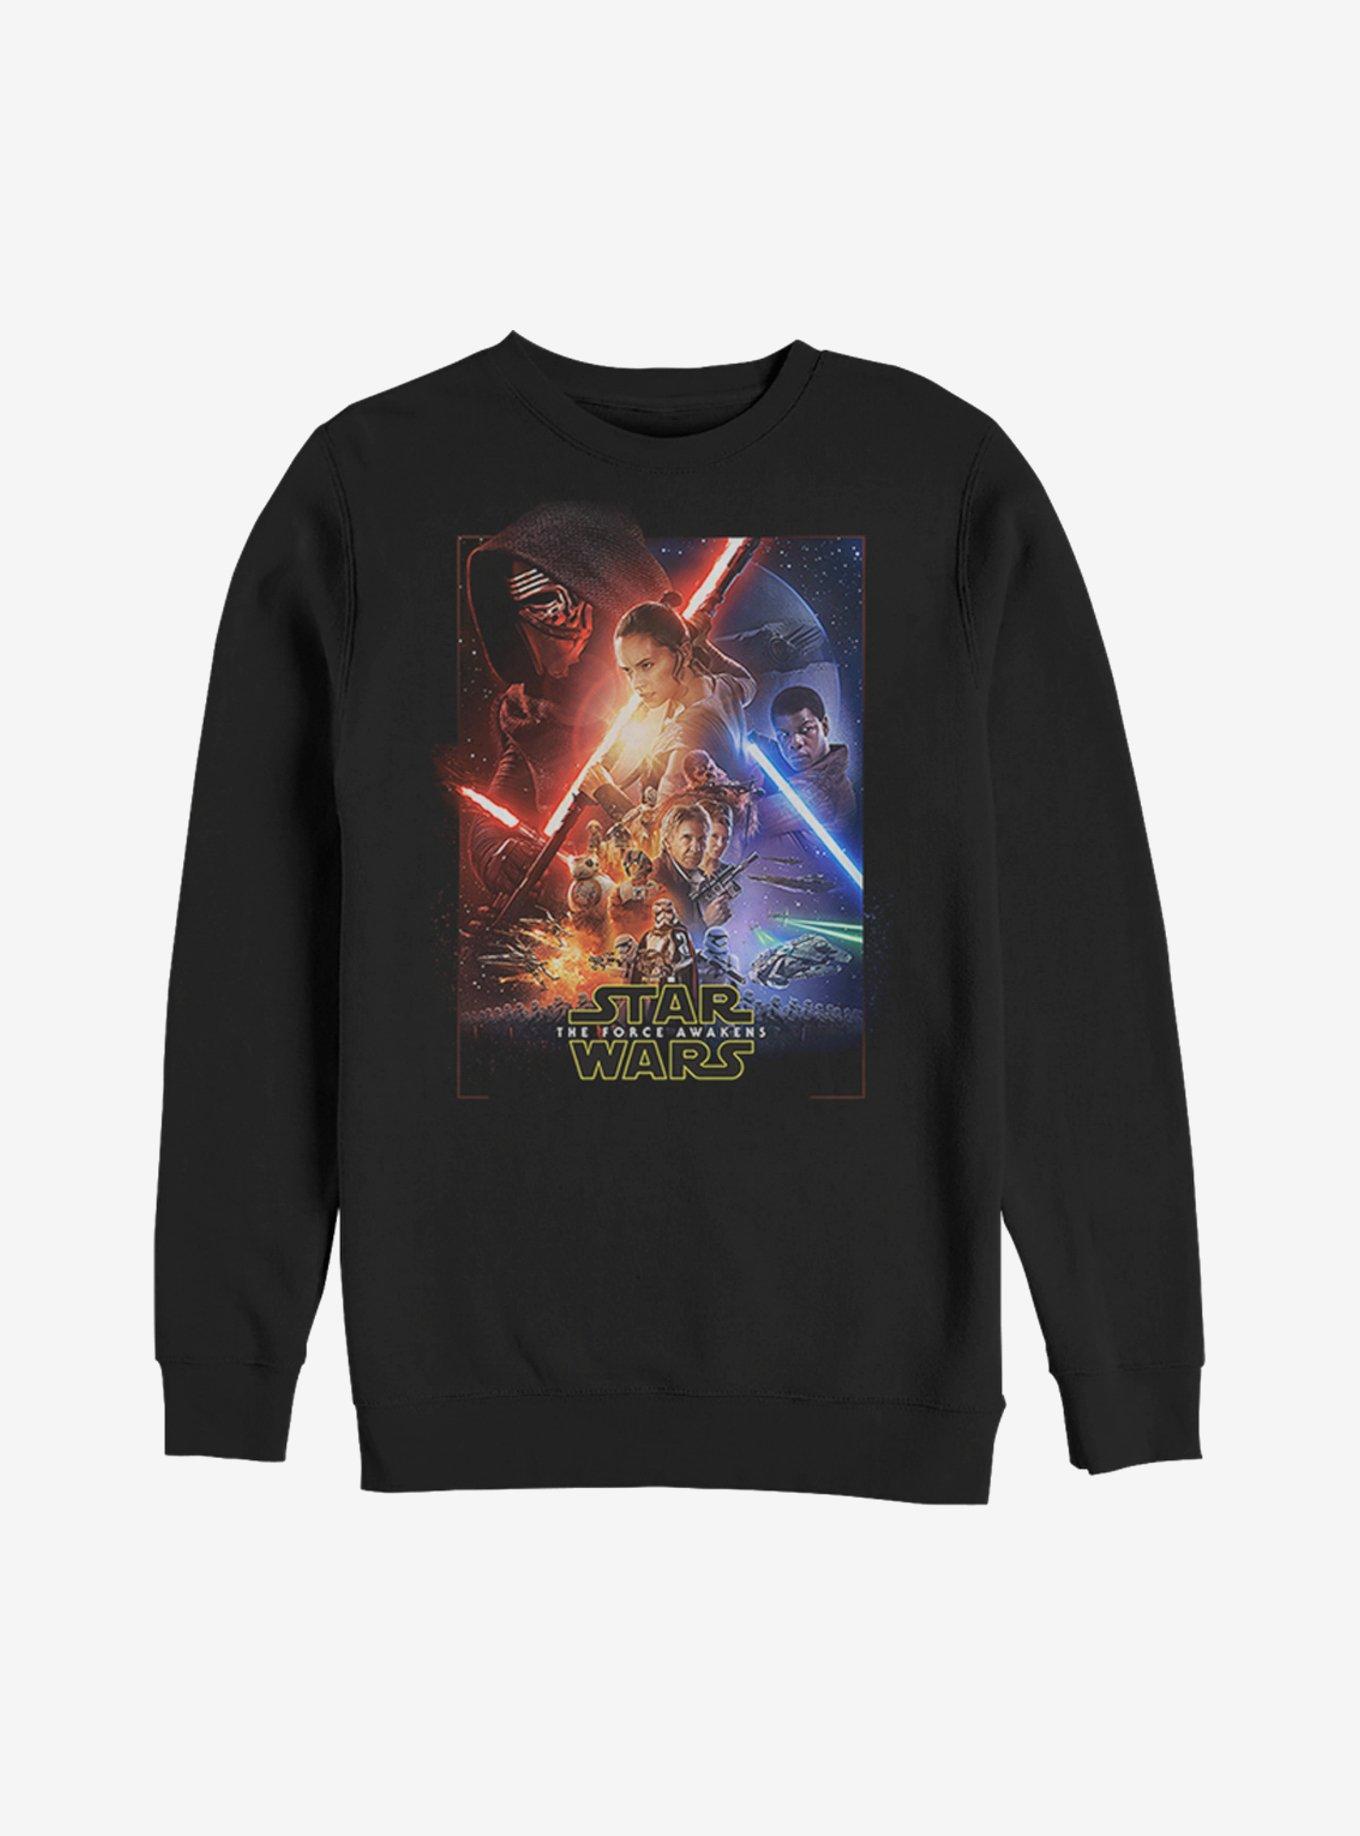 Star Wars Episode VII The Force Awakens Movie Poster Sweatshirt, BLACK, hi-res